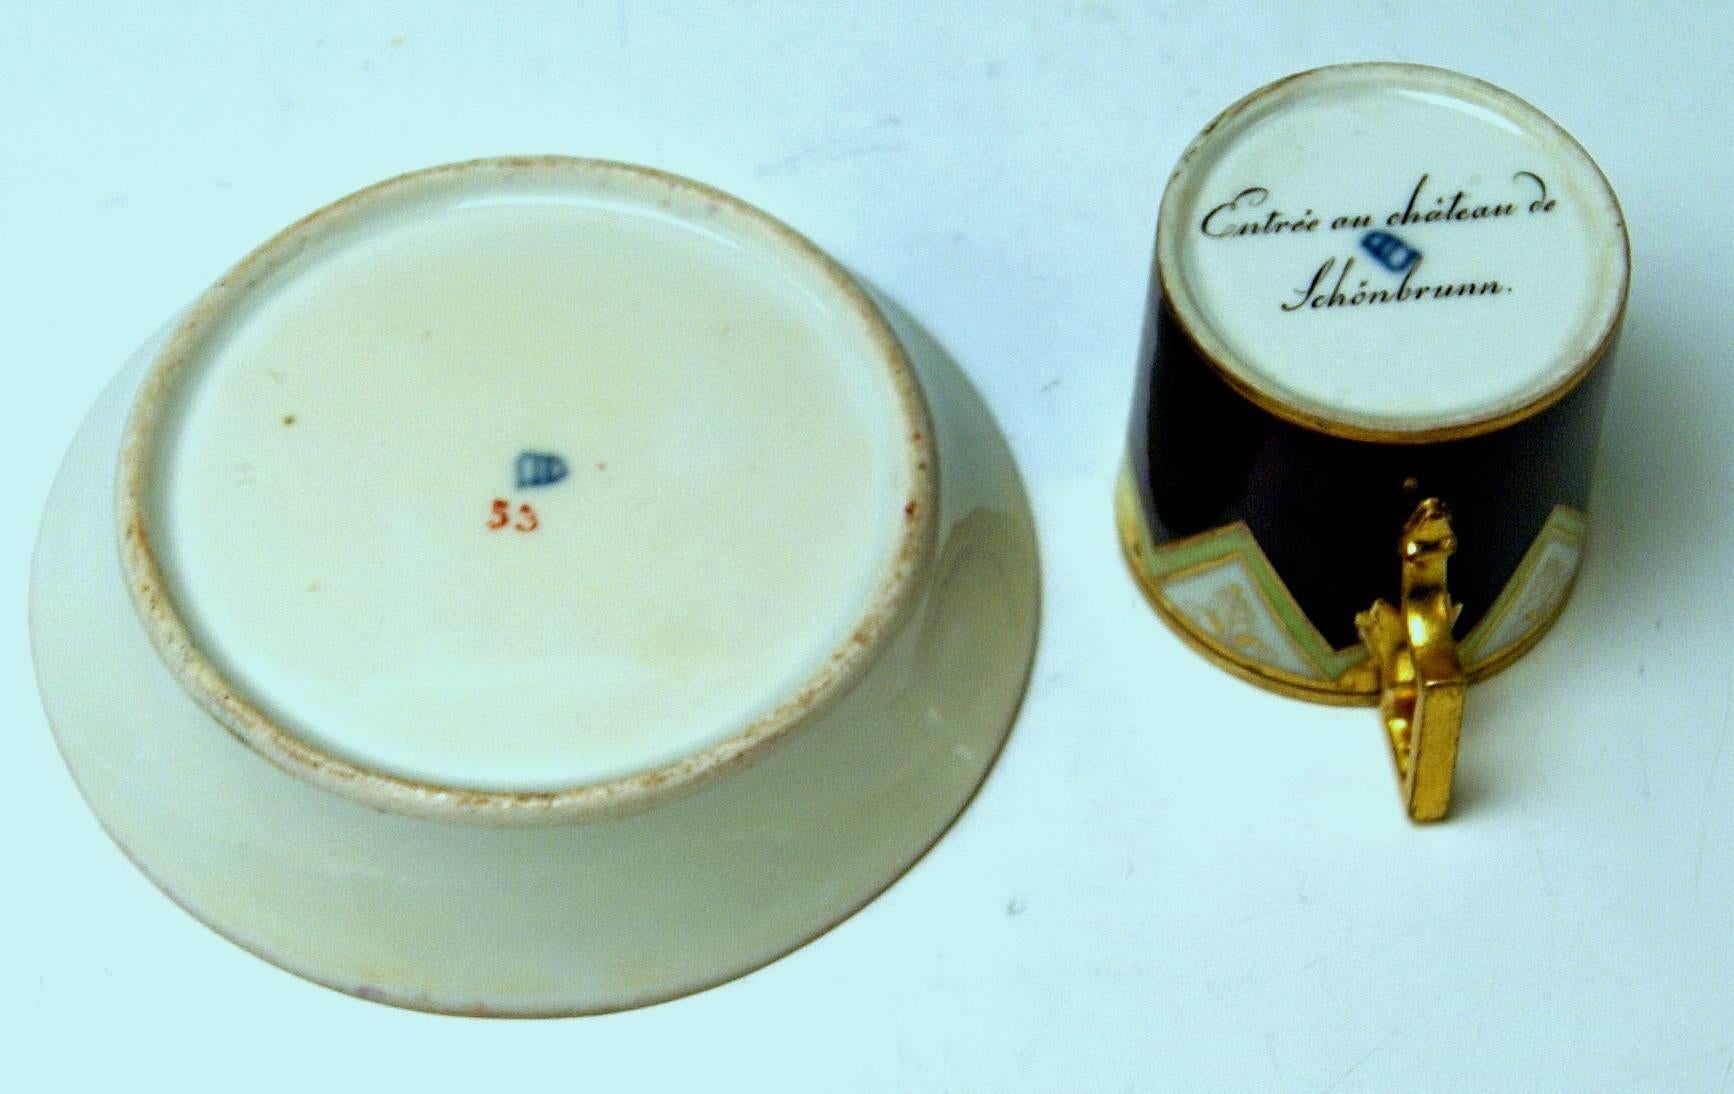 Vienna Imperial Porcelain Cup Saucer Schoenbrunn Castle, Austria, 1811 1